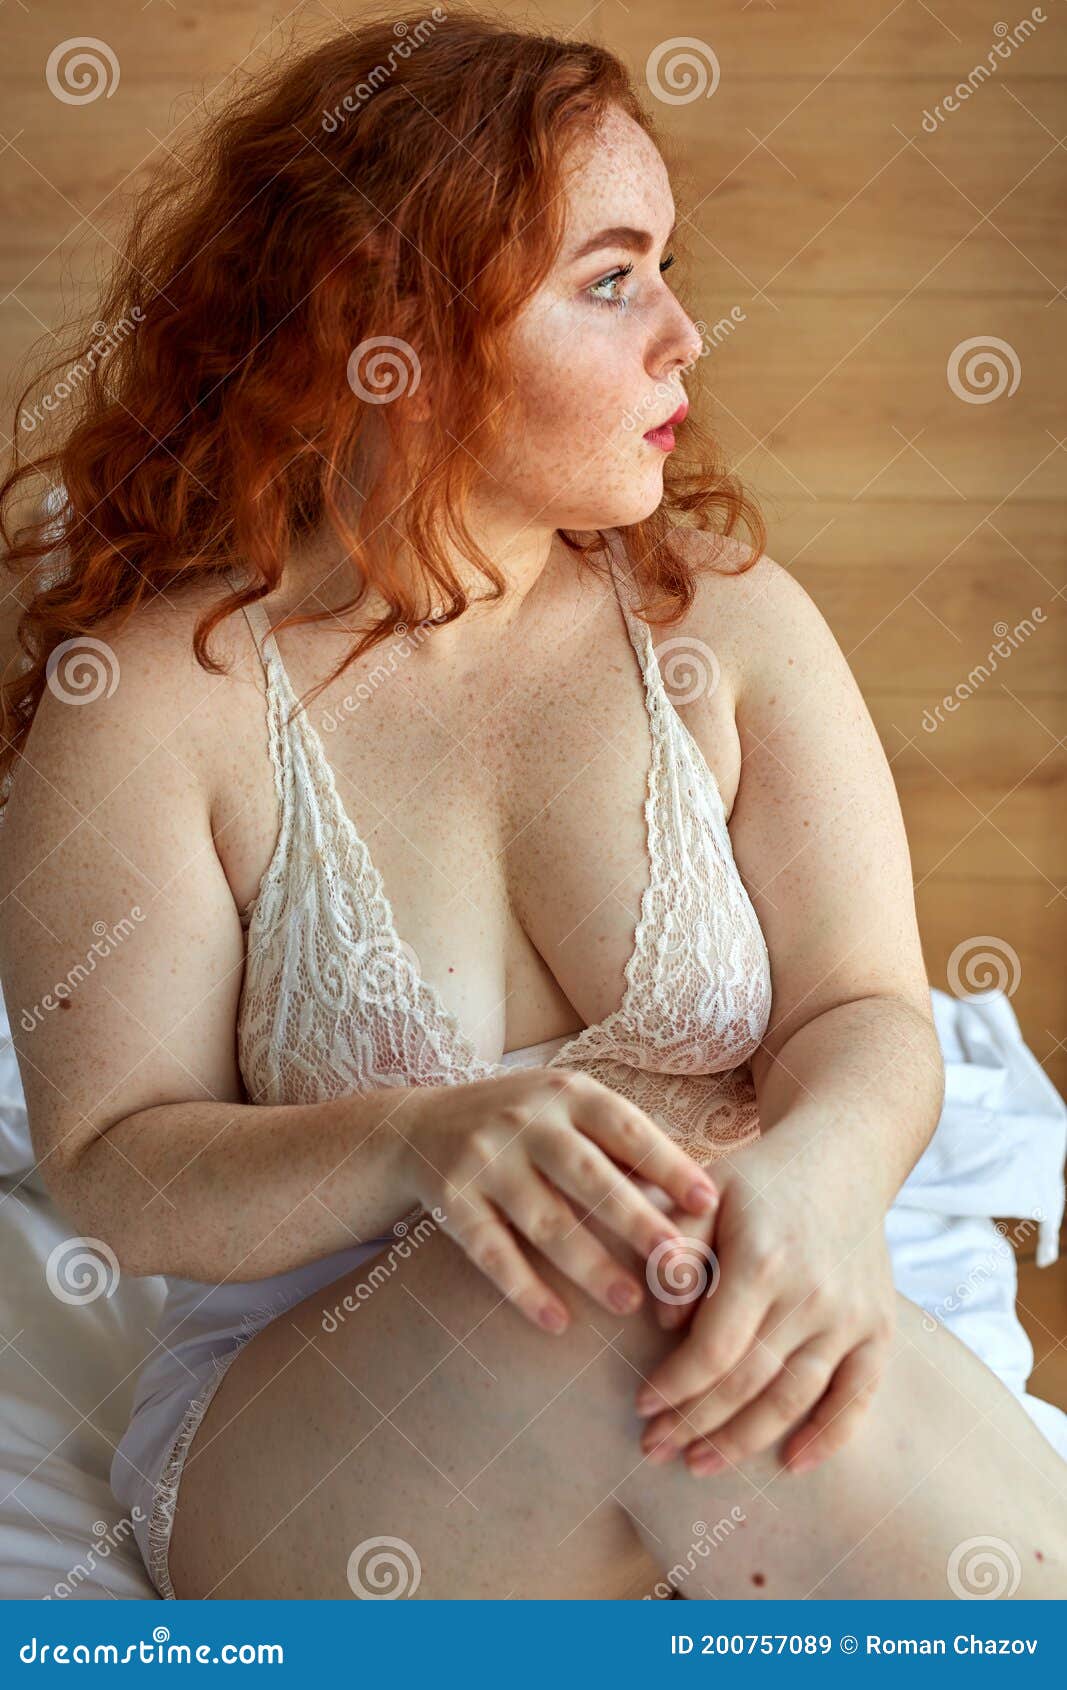 dimitris kechagias add photo fat woman sexy video